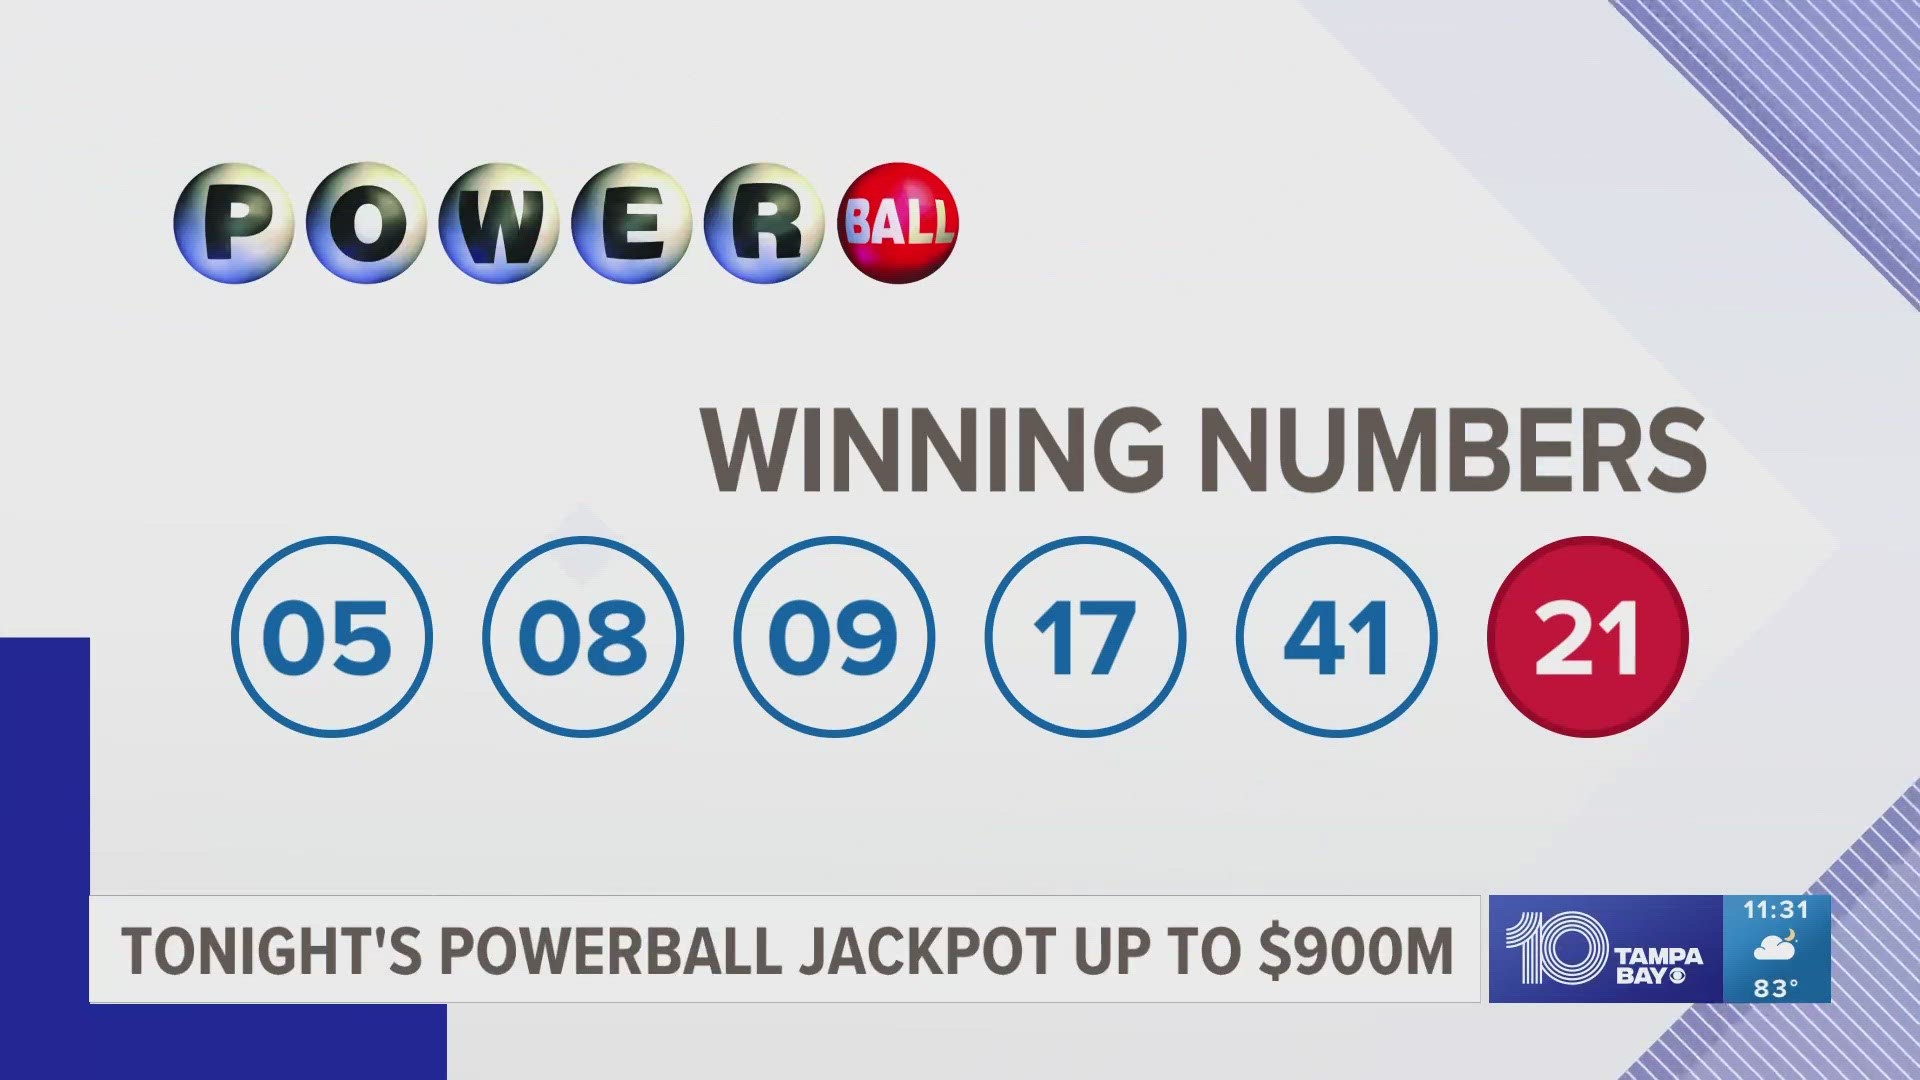 Florida Powerball lottery winner gets 1M; jackpot at 1B